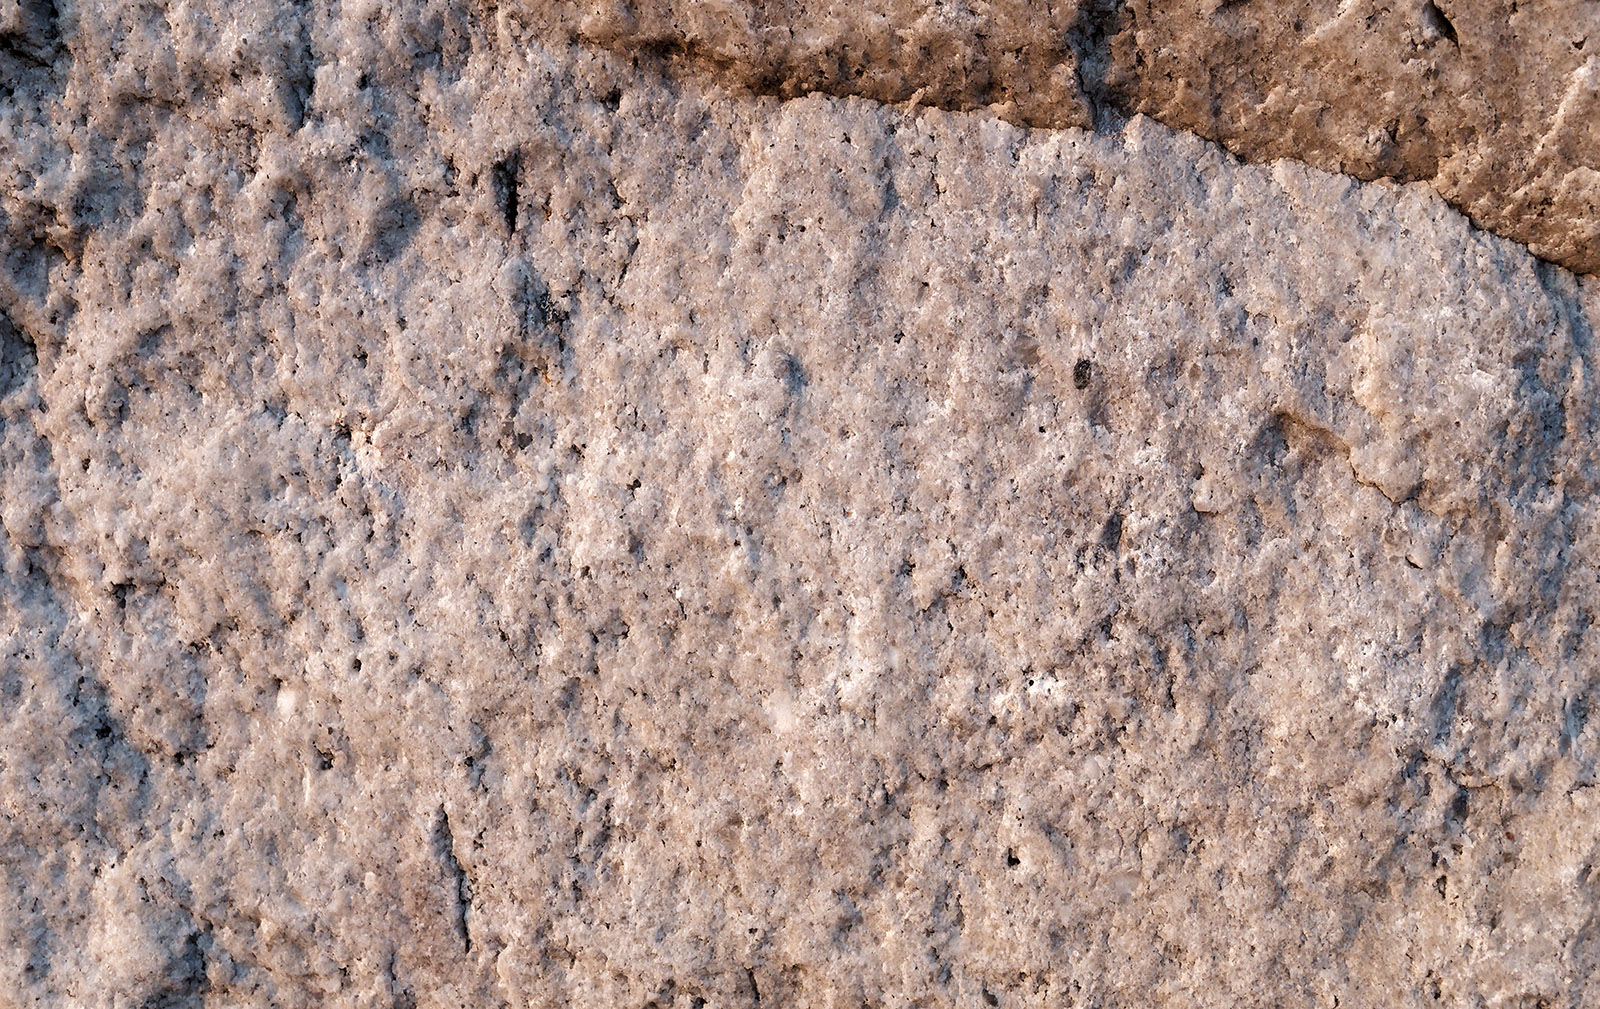 Quartzite from Cheaha Mountain